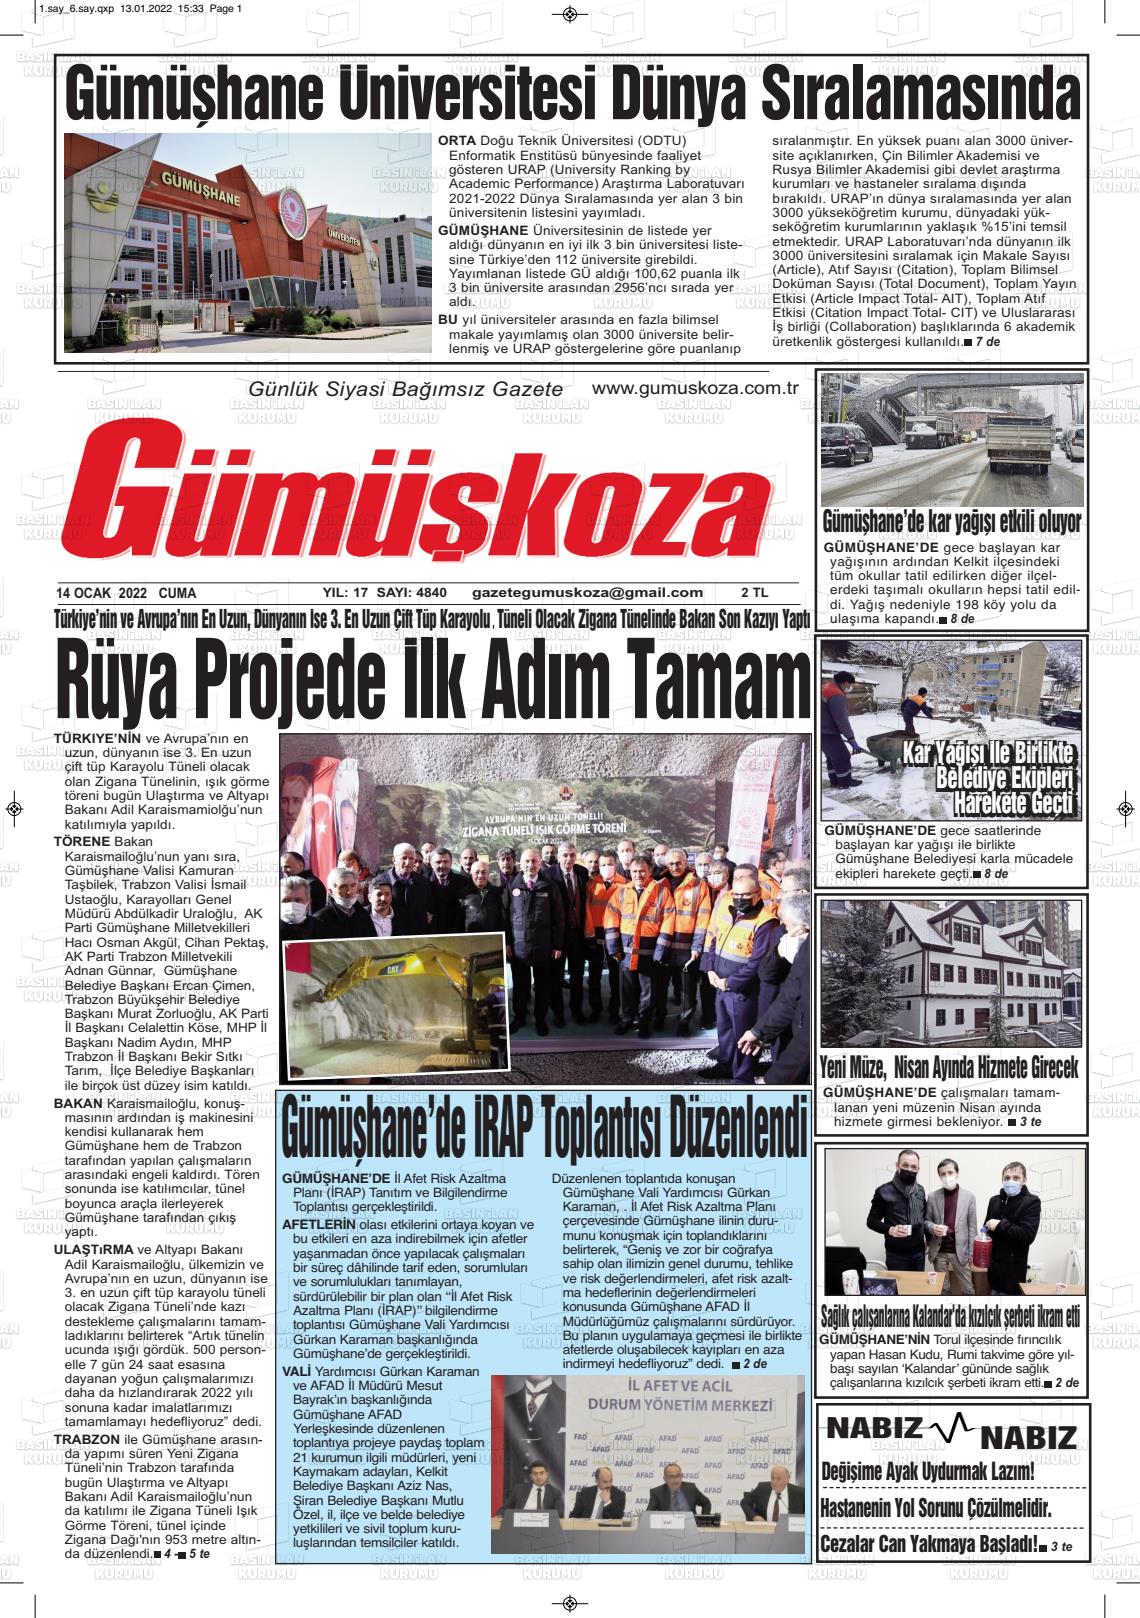 14 Ocak 2022 Gümüşkoza Gazete Manşeti